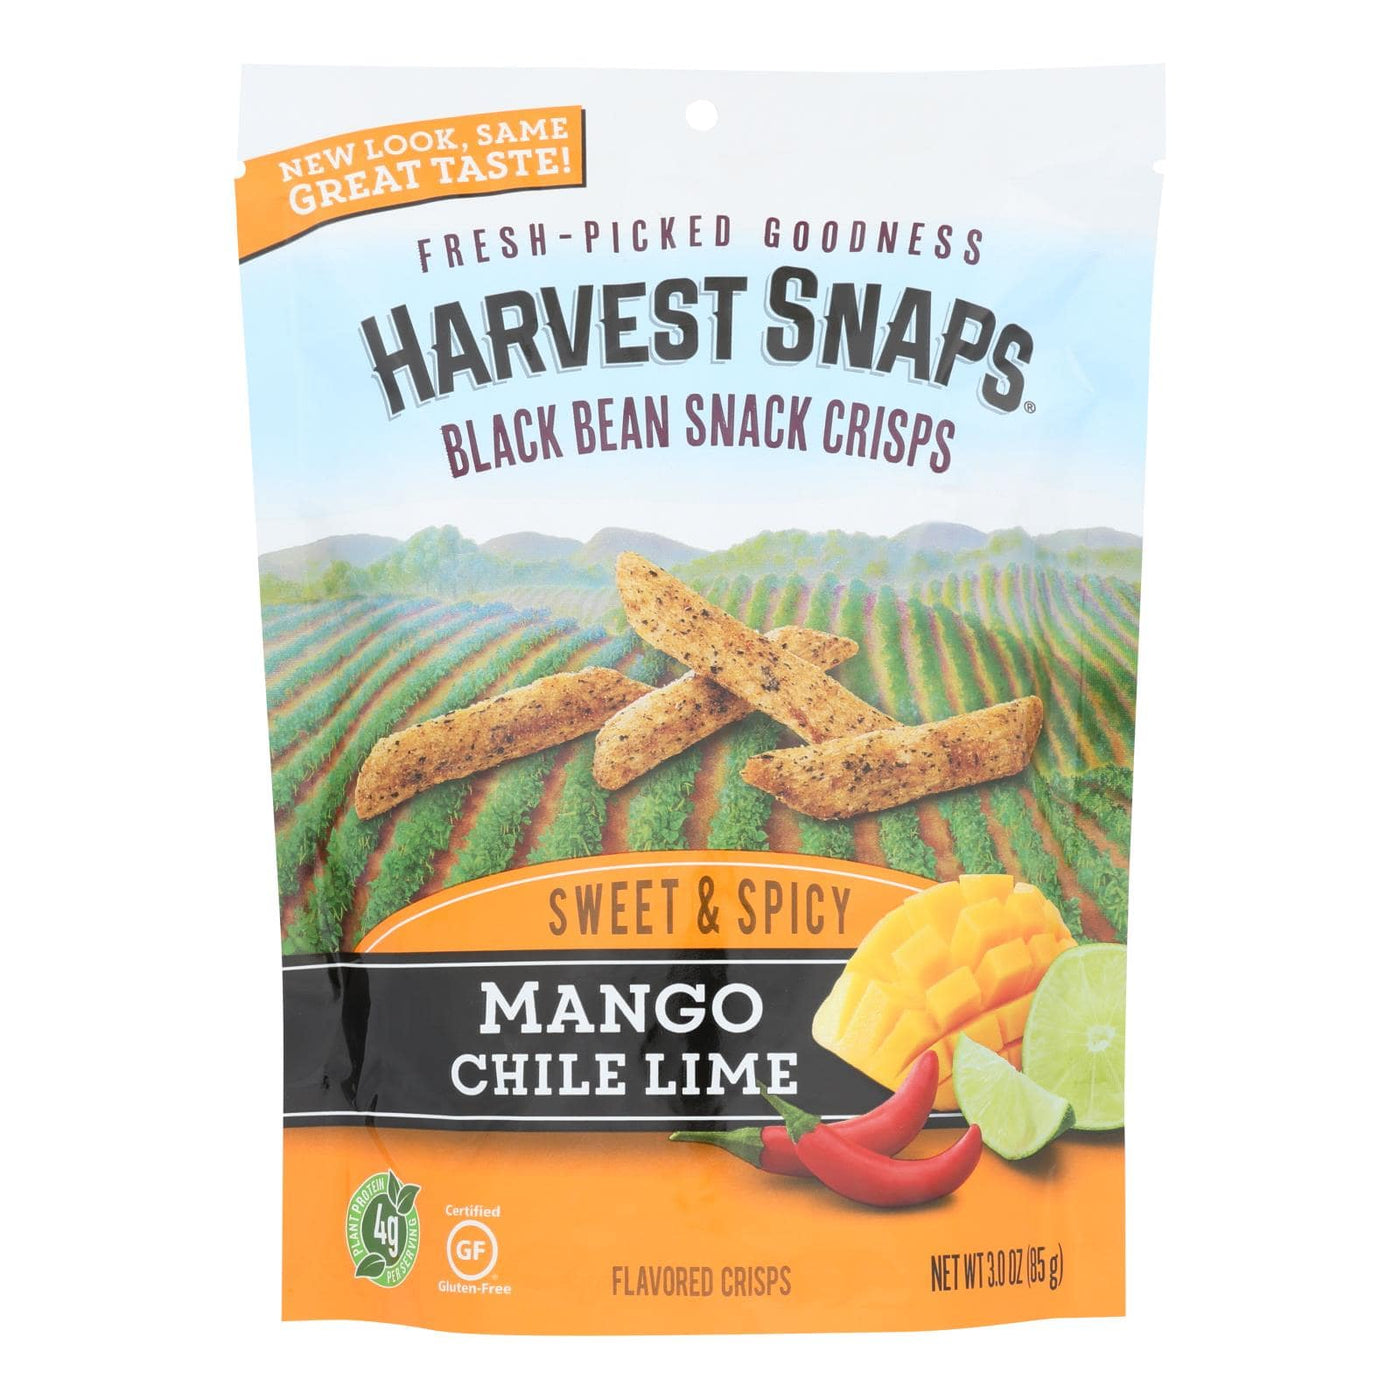 Buy Calbee Snapea Crisp - Black Bean Crisps - Mango Chile Lime - Case Of 12 - 3 Oz  at OnlyNaturals.us